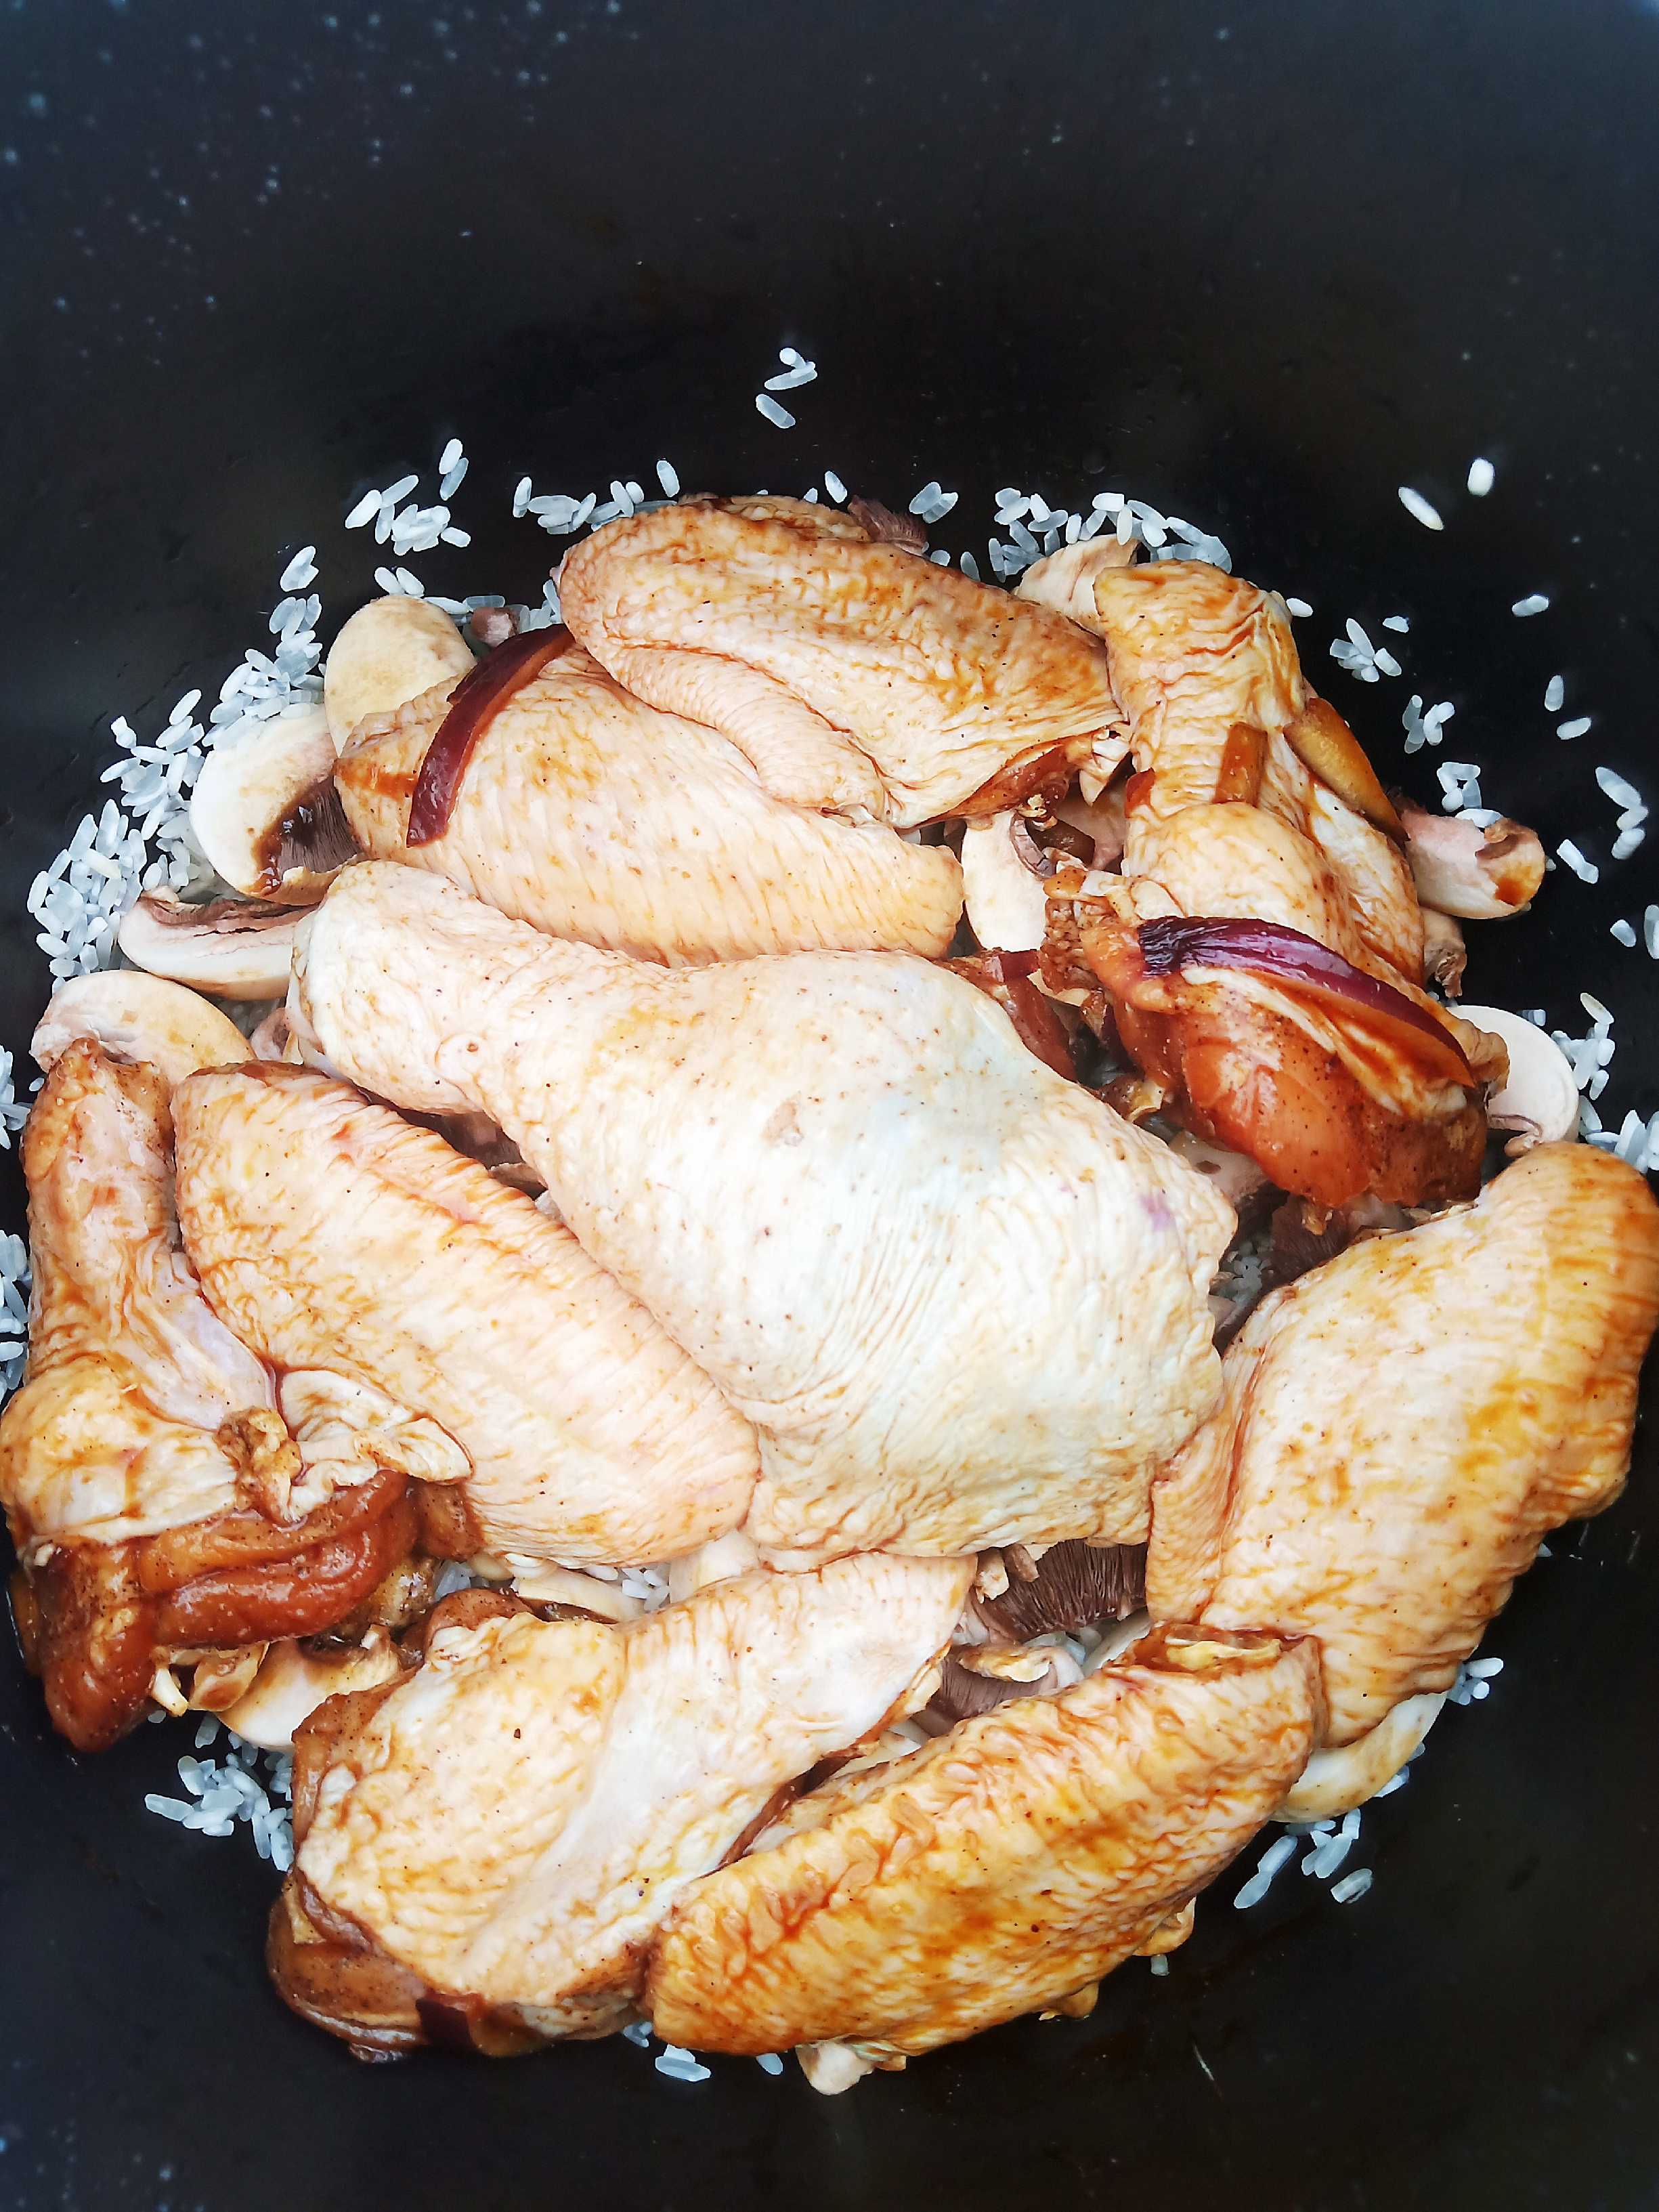 Chicken Braised Rice recipe